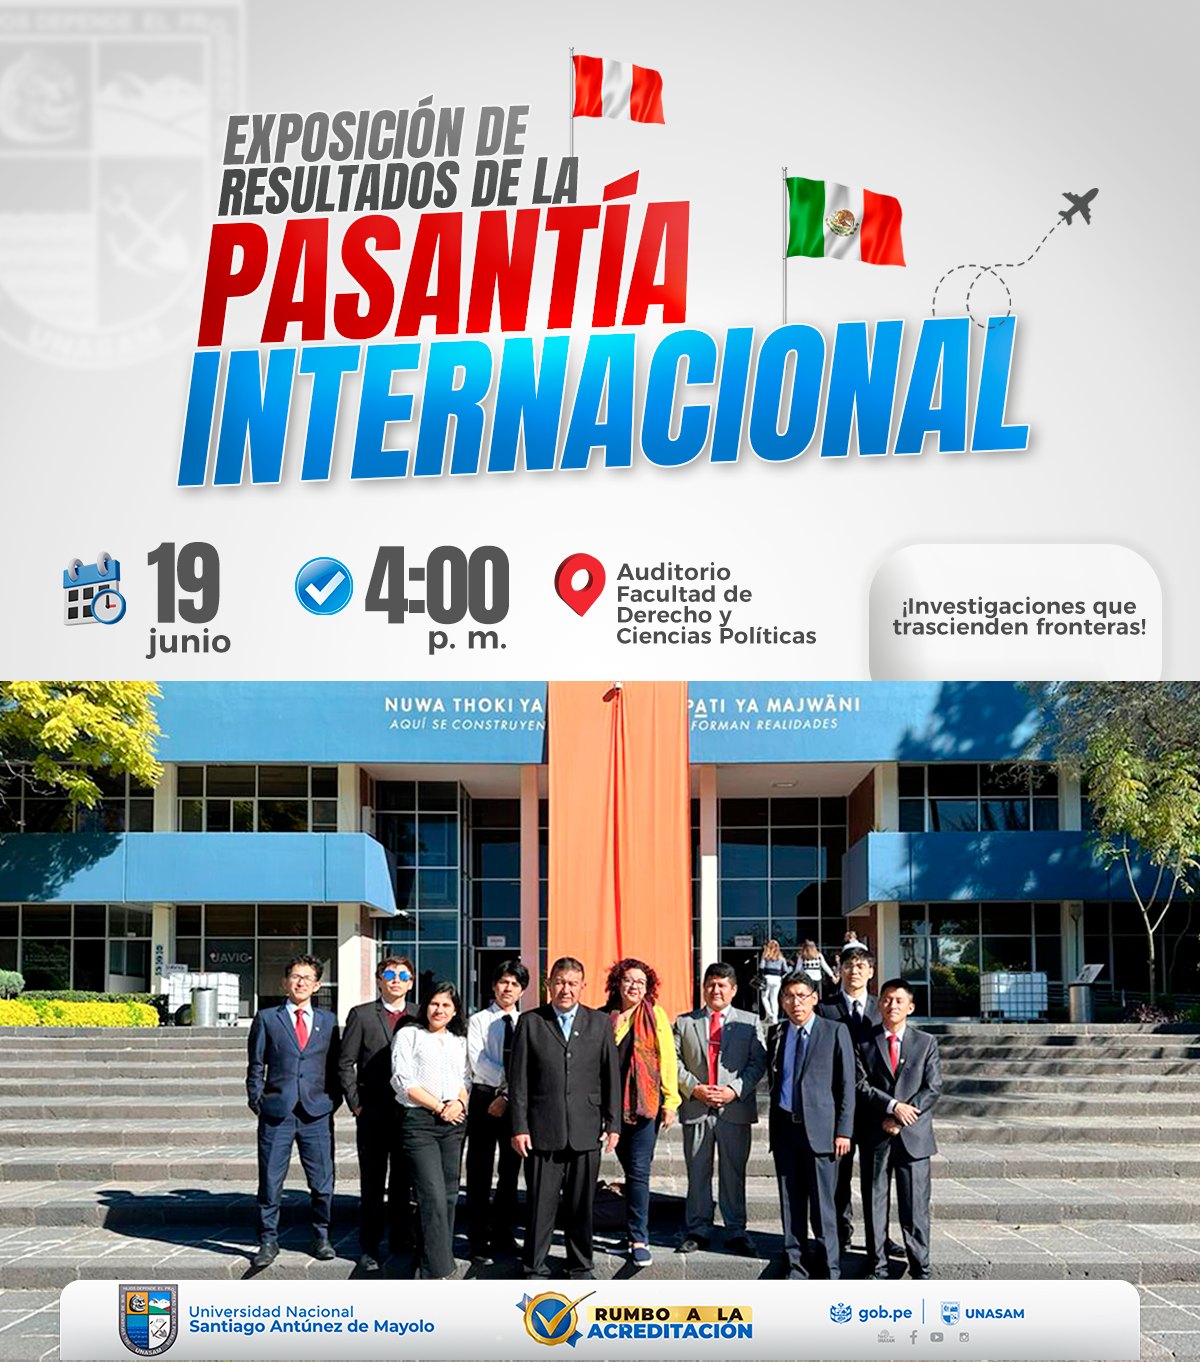  														EXPOSICIÓN DE RESULTADOS DE LA PASANTÍA INTERNACIONAL A MÉXICO
														